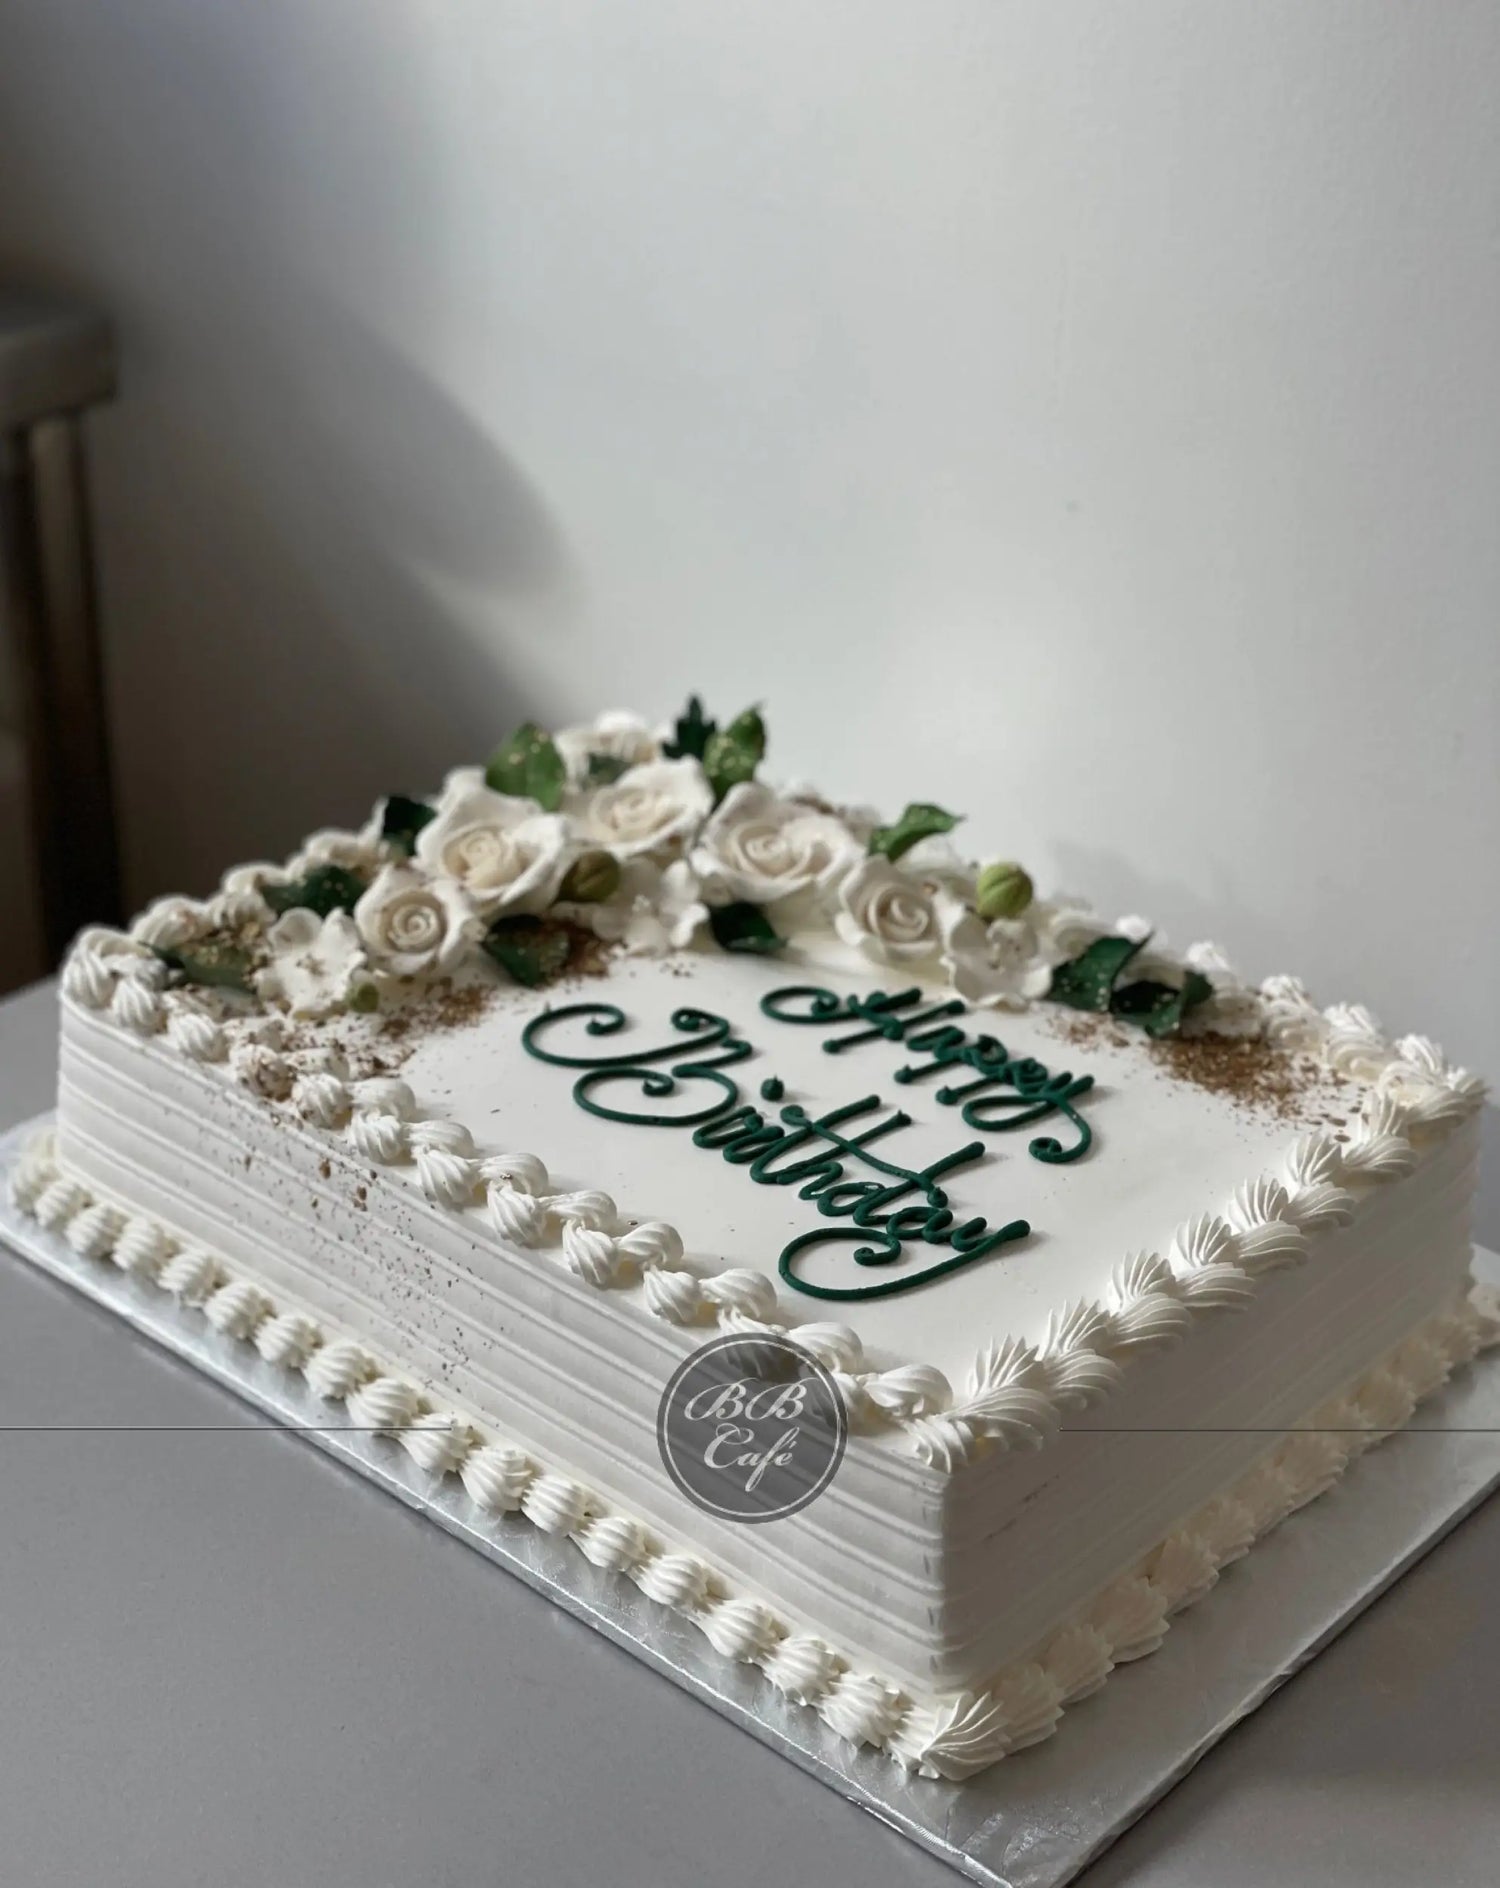 Sugar roses on whipped cream - custom cake